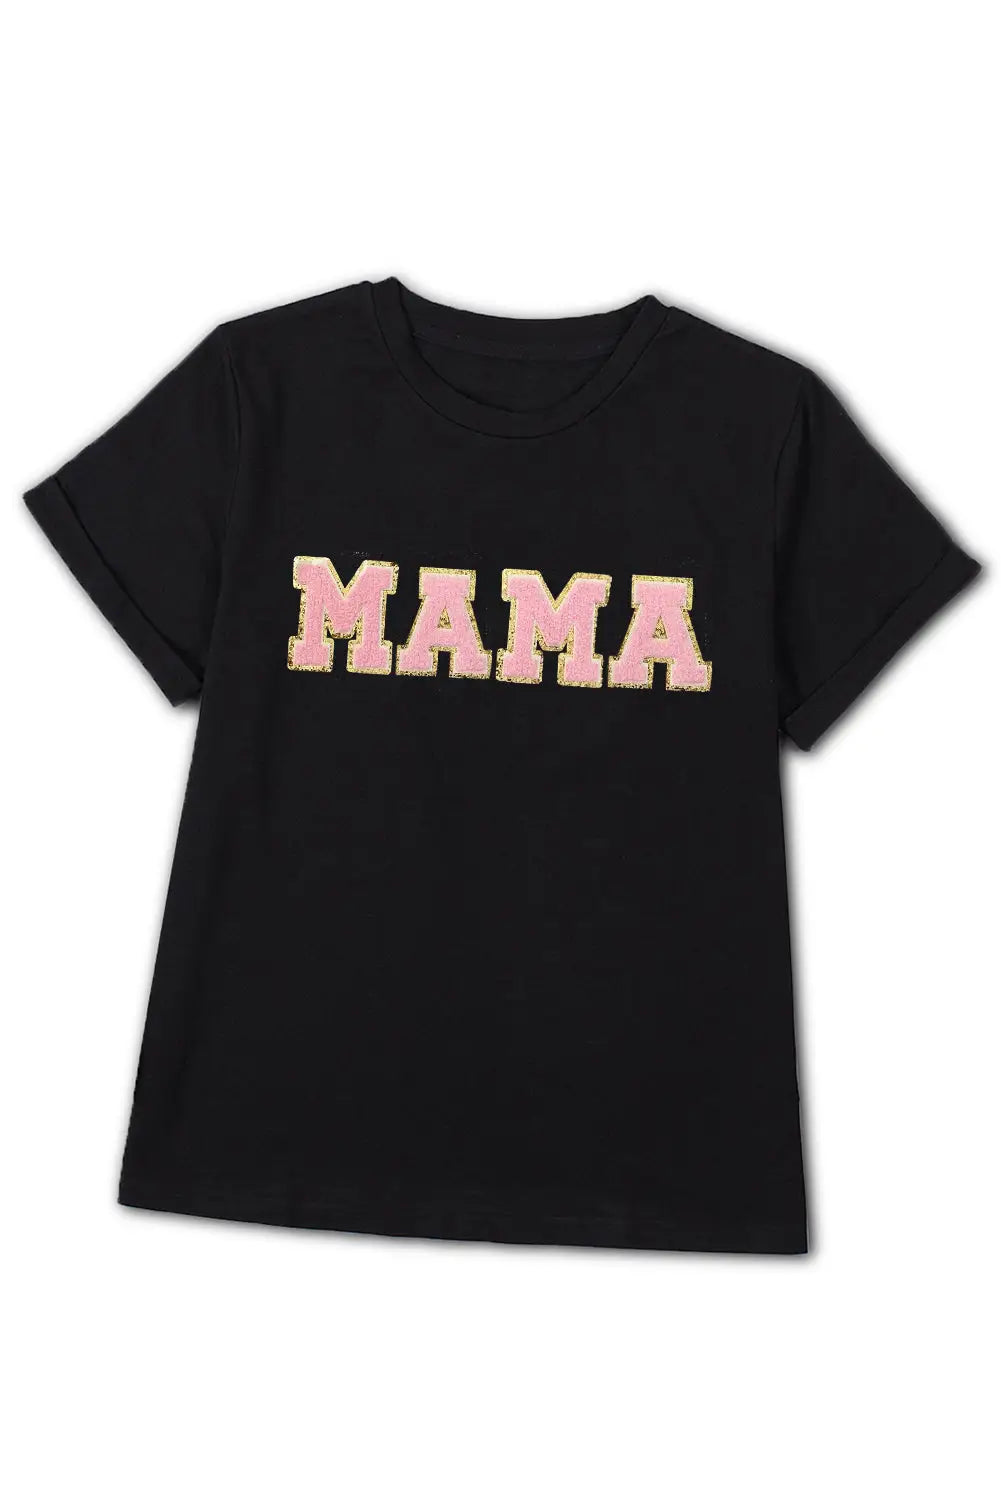 Black mama chenille graphic tee - t-shirts